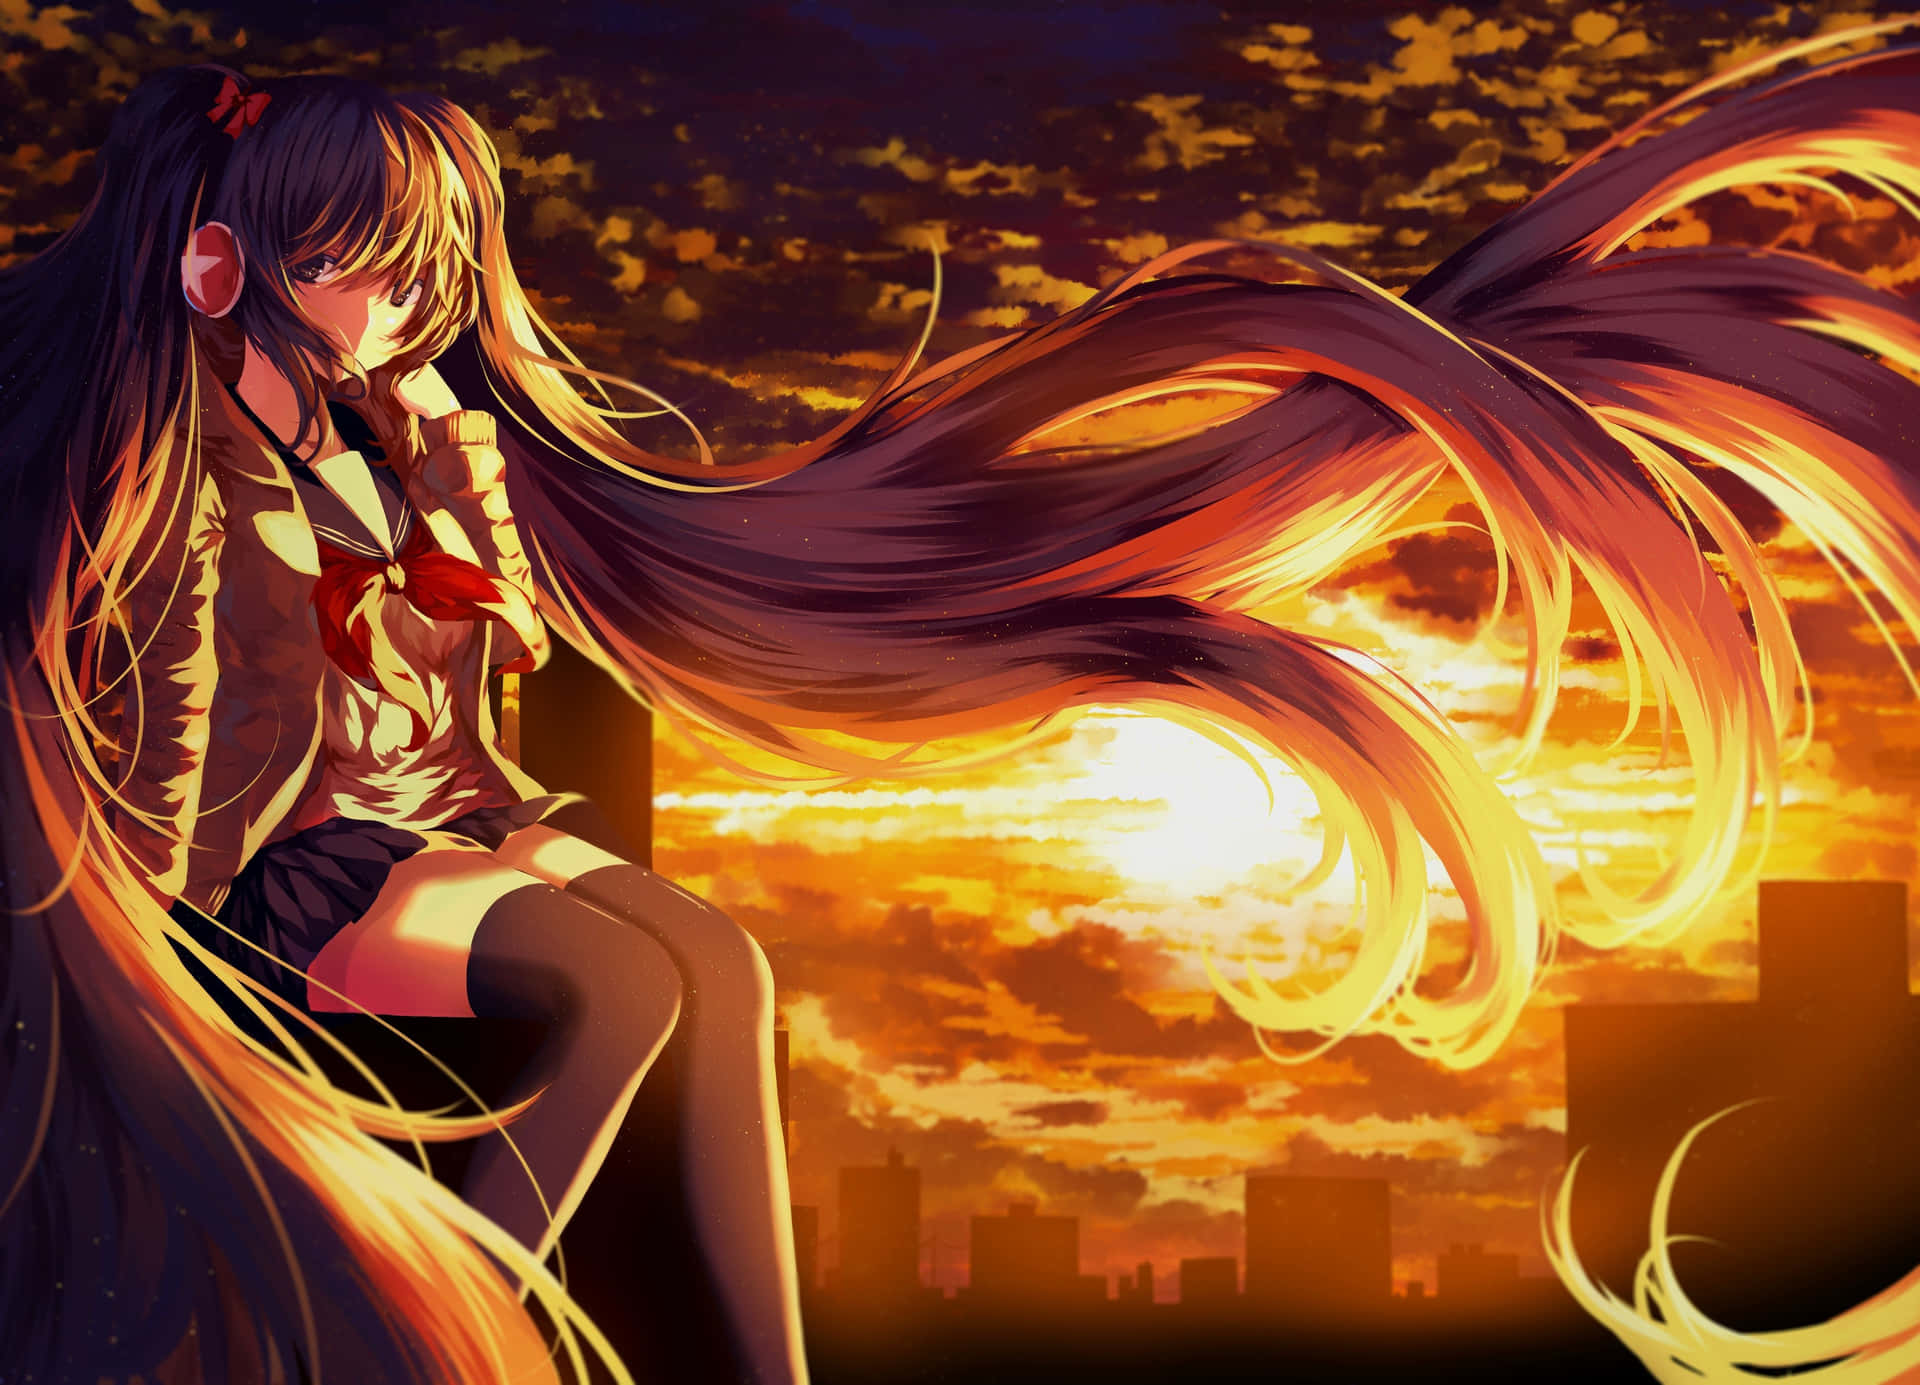 Caption: Tranquil Anime Sunset - A Serene World Awaits